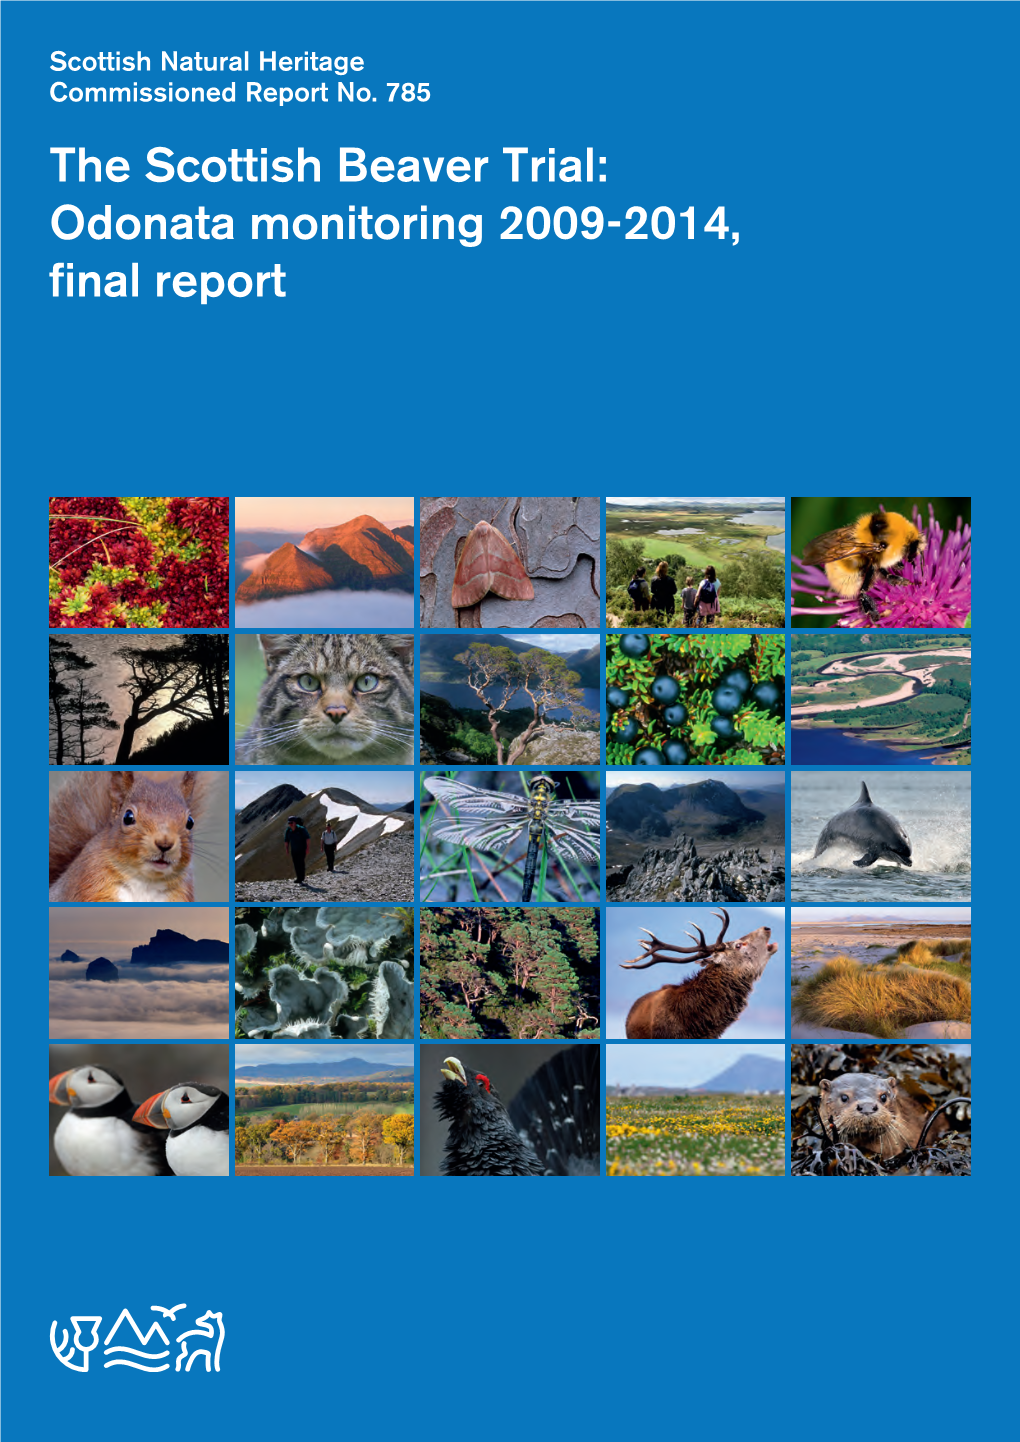 The Scottish Beaver Trial: Odonata Monitoring 2009-2014, Final Report